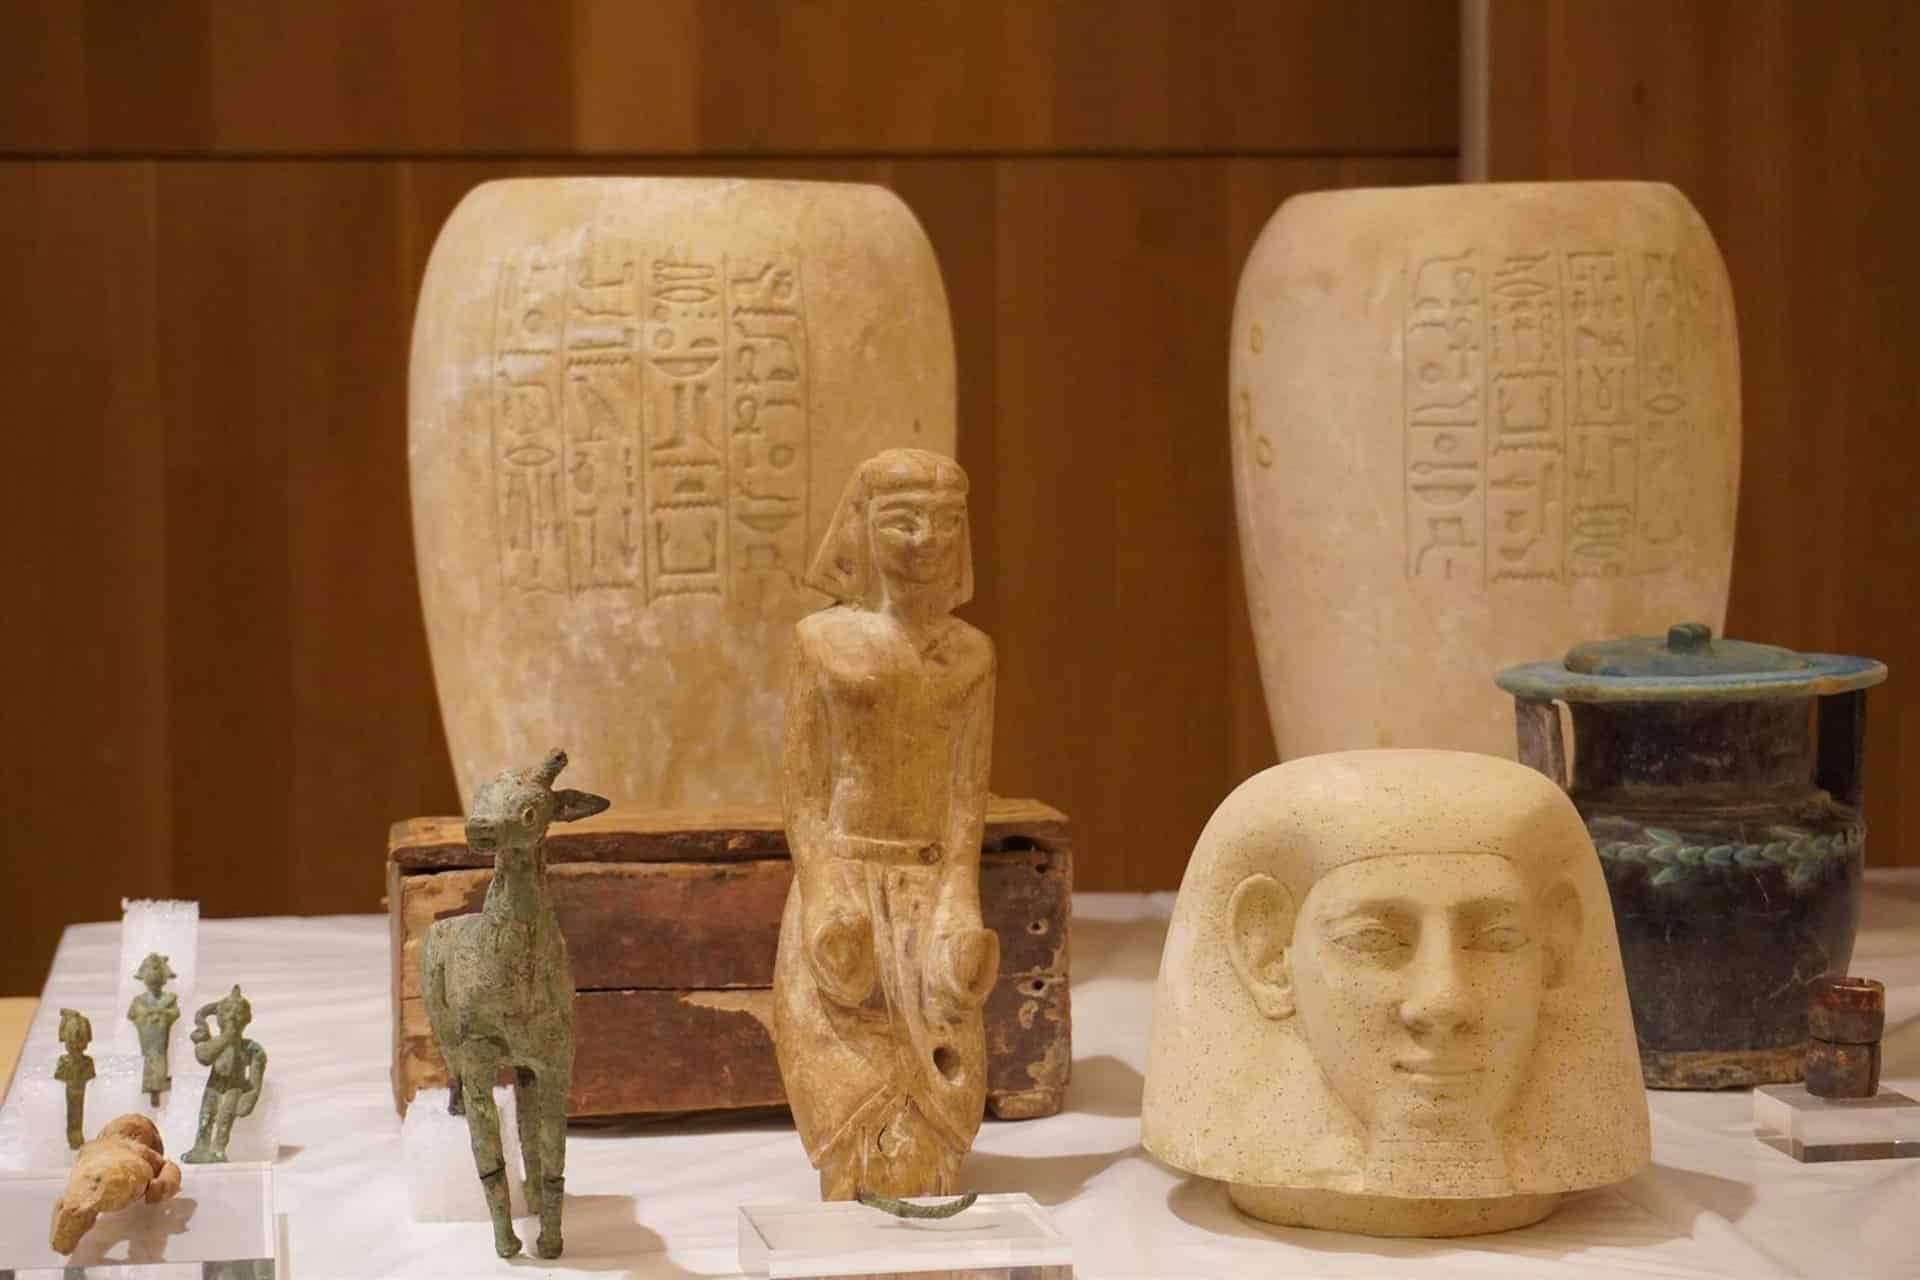 Piezas arqueológicas de Egipto recuperadas en operación policial